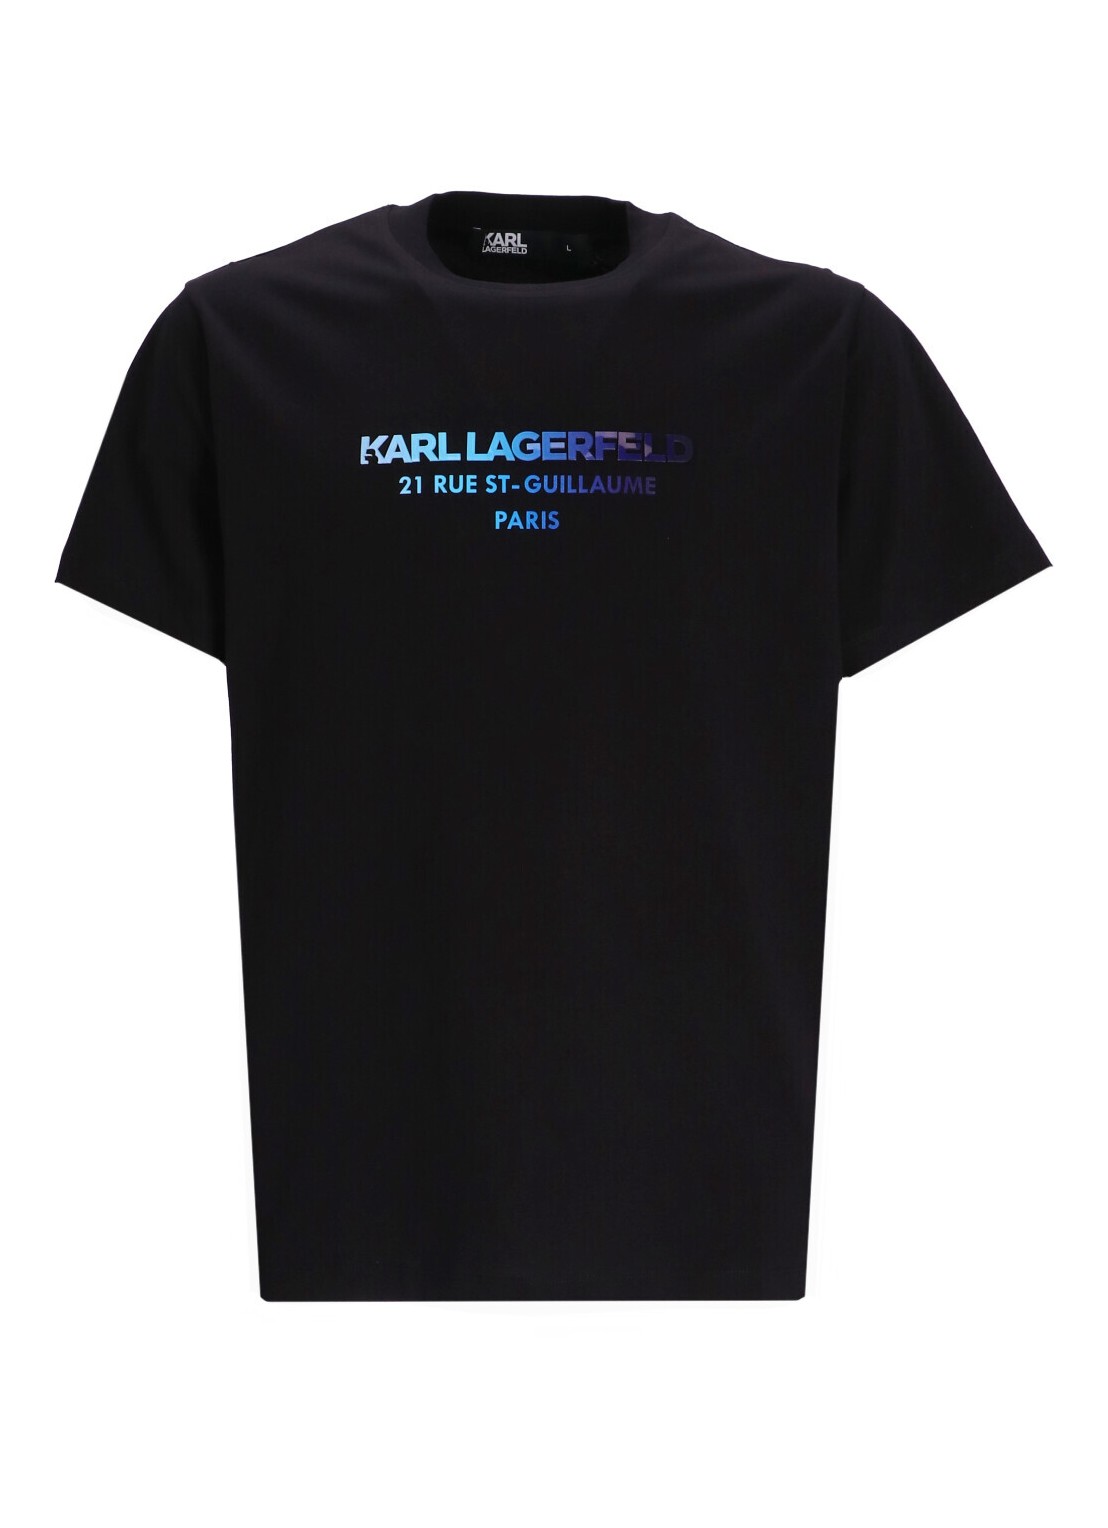 Camiseta karl lagerfeld t-shirt mant-shirt crewneck - 755062542241 990 talla L
 